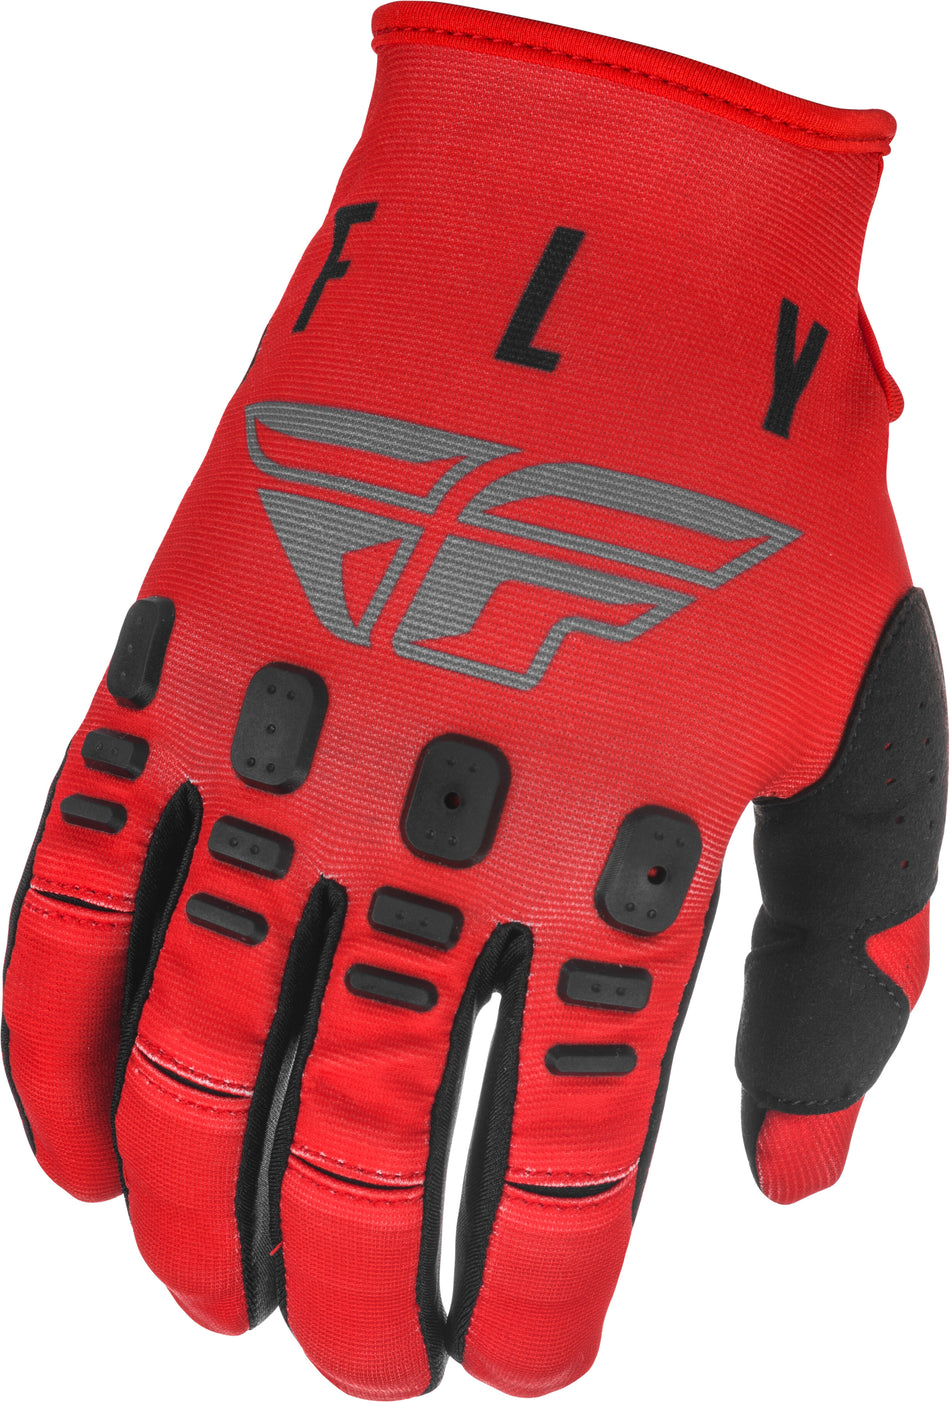 FLY RACING Kinetic K121 Gloves Red/Grey/Black Sz 09 374-41209